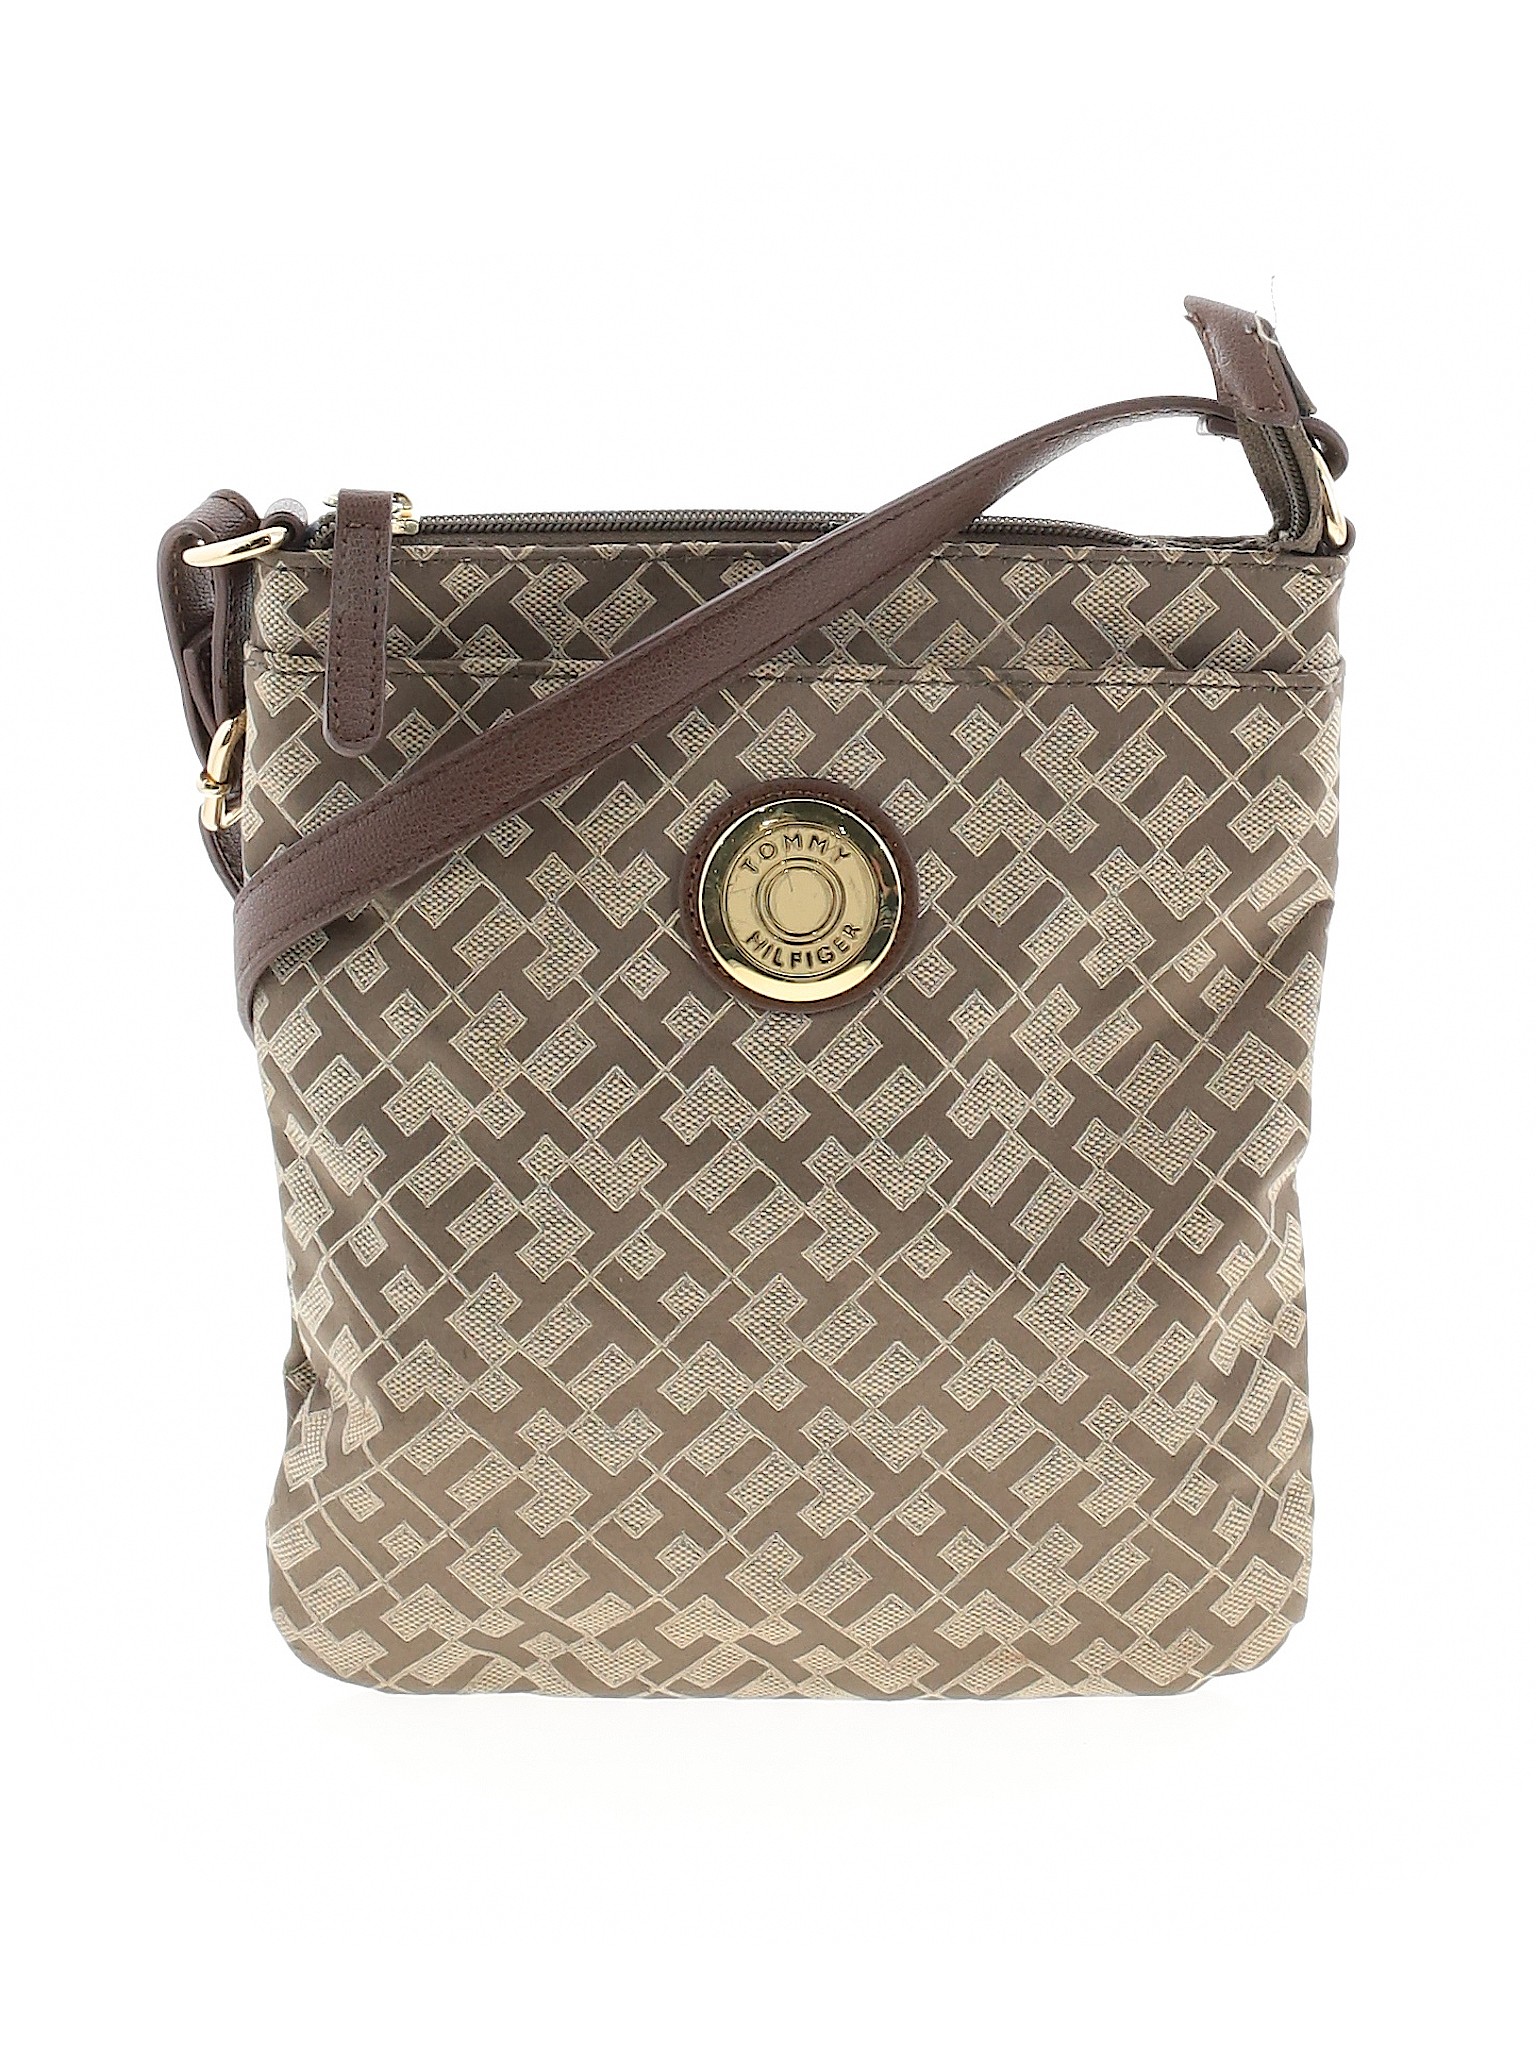 Tommy Hilfiger Women Brown Crossbody Bag One Size | eBay